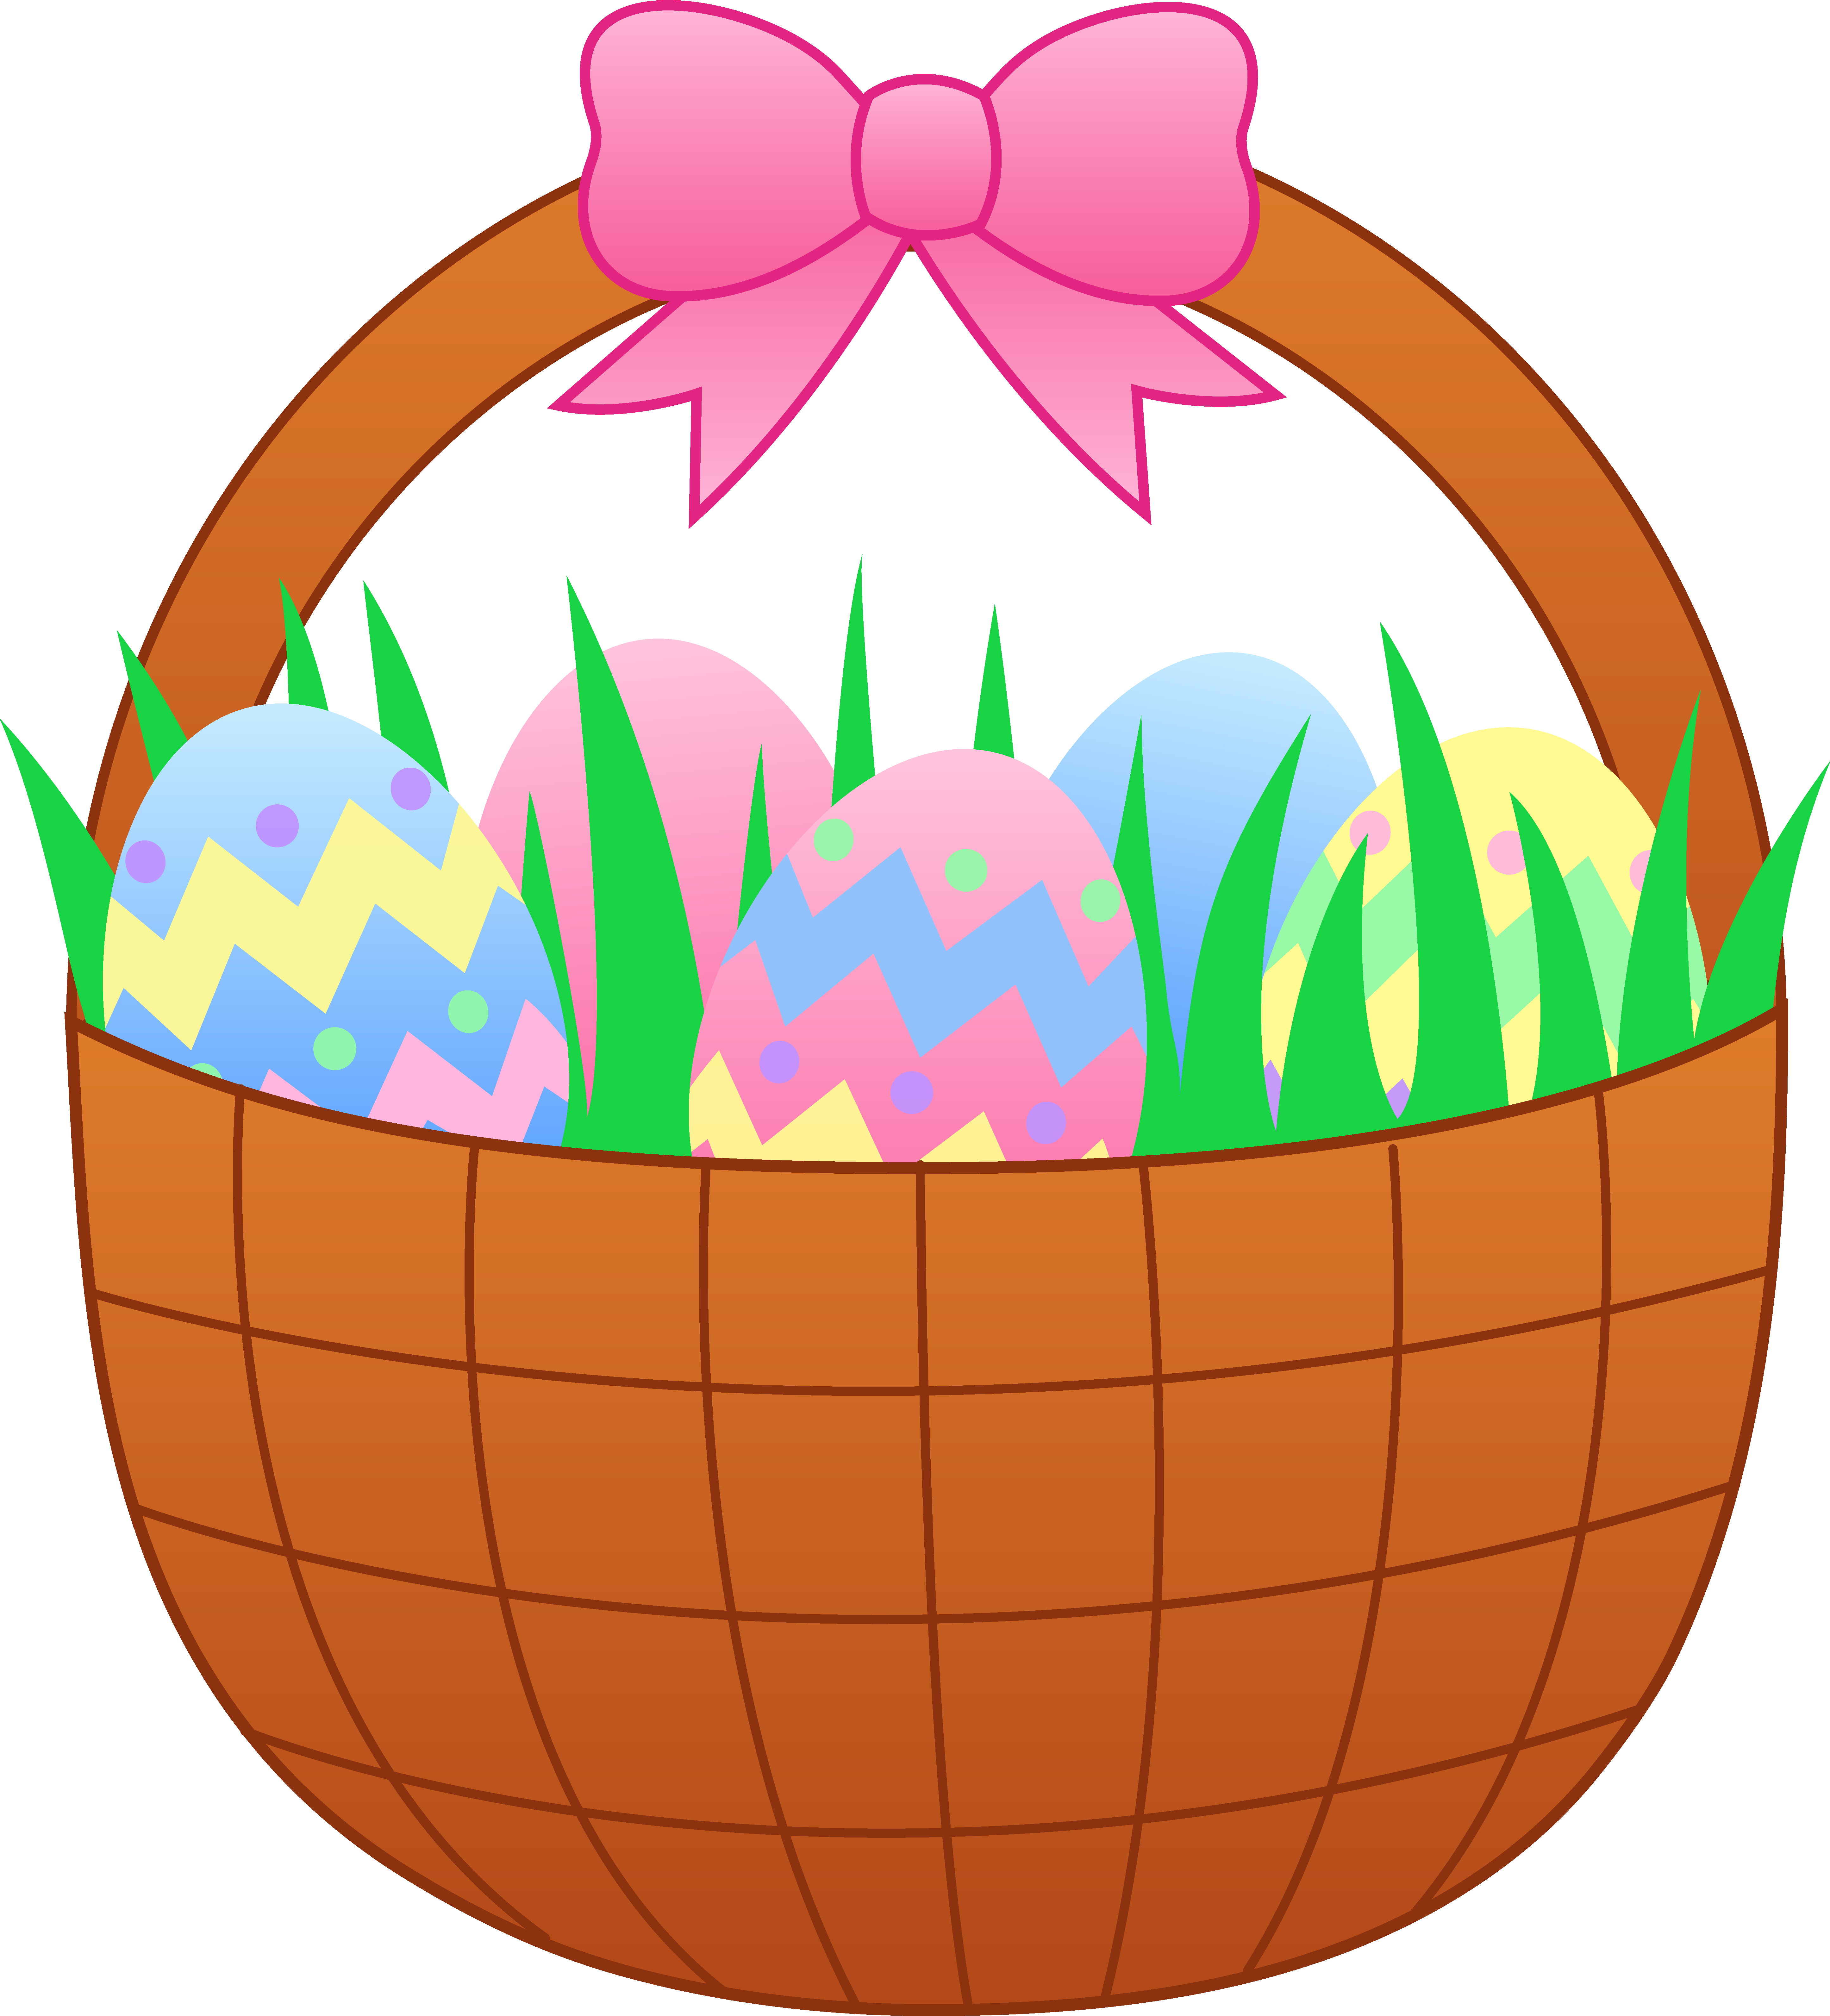 Cartoon Easter Eggs Photo Album - Jefney